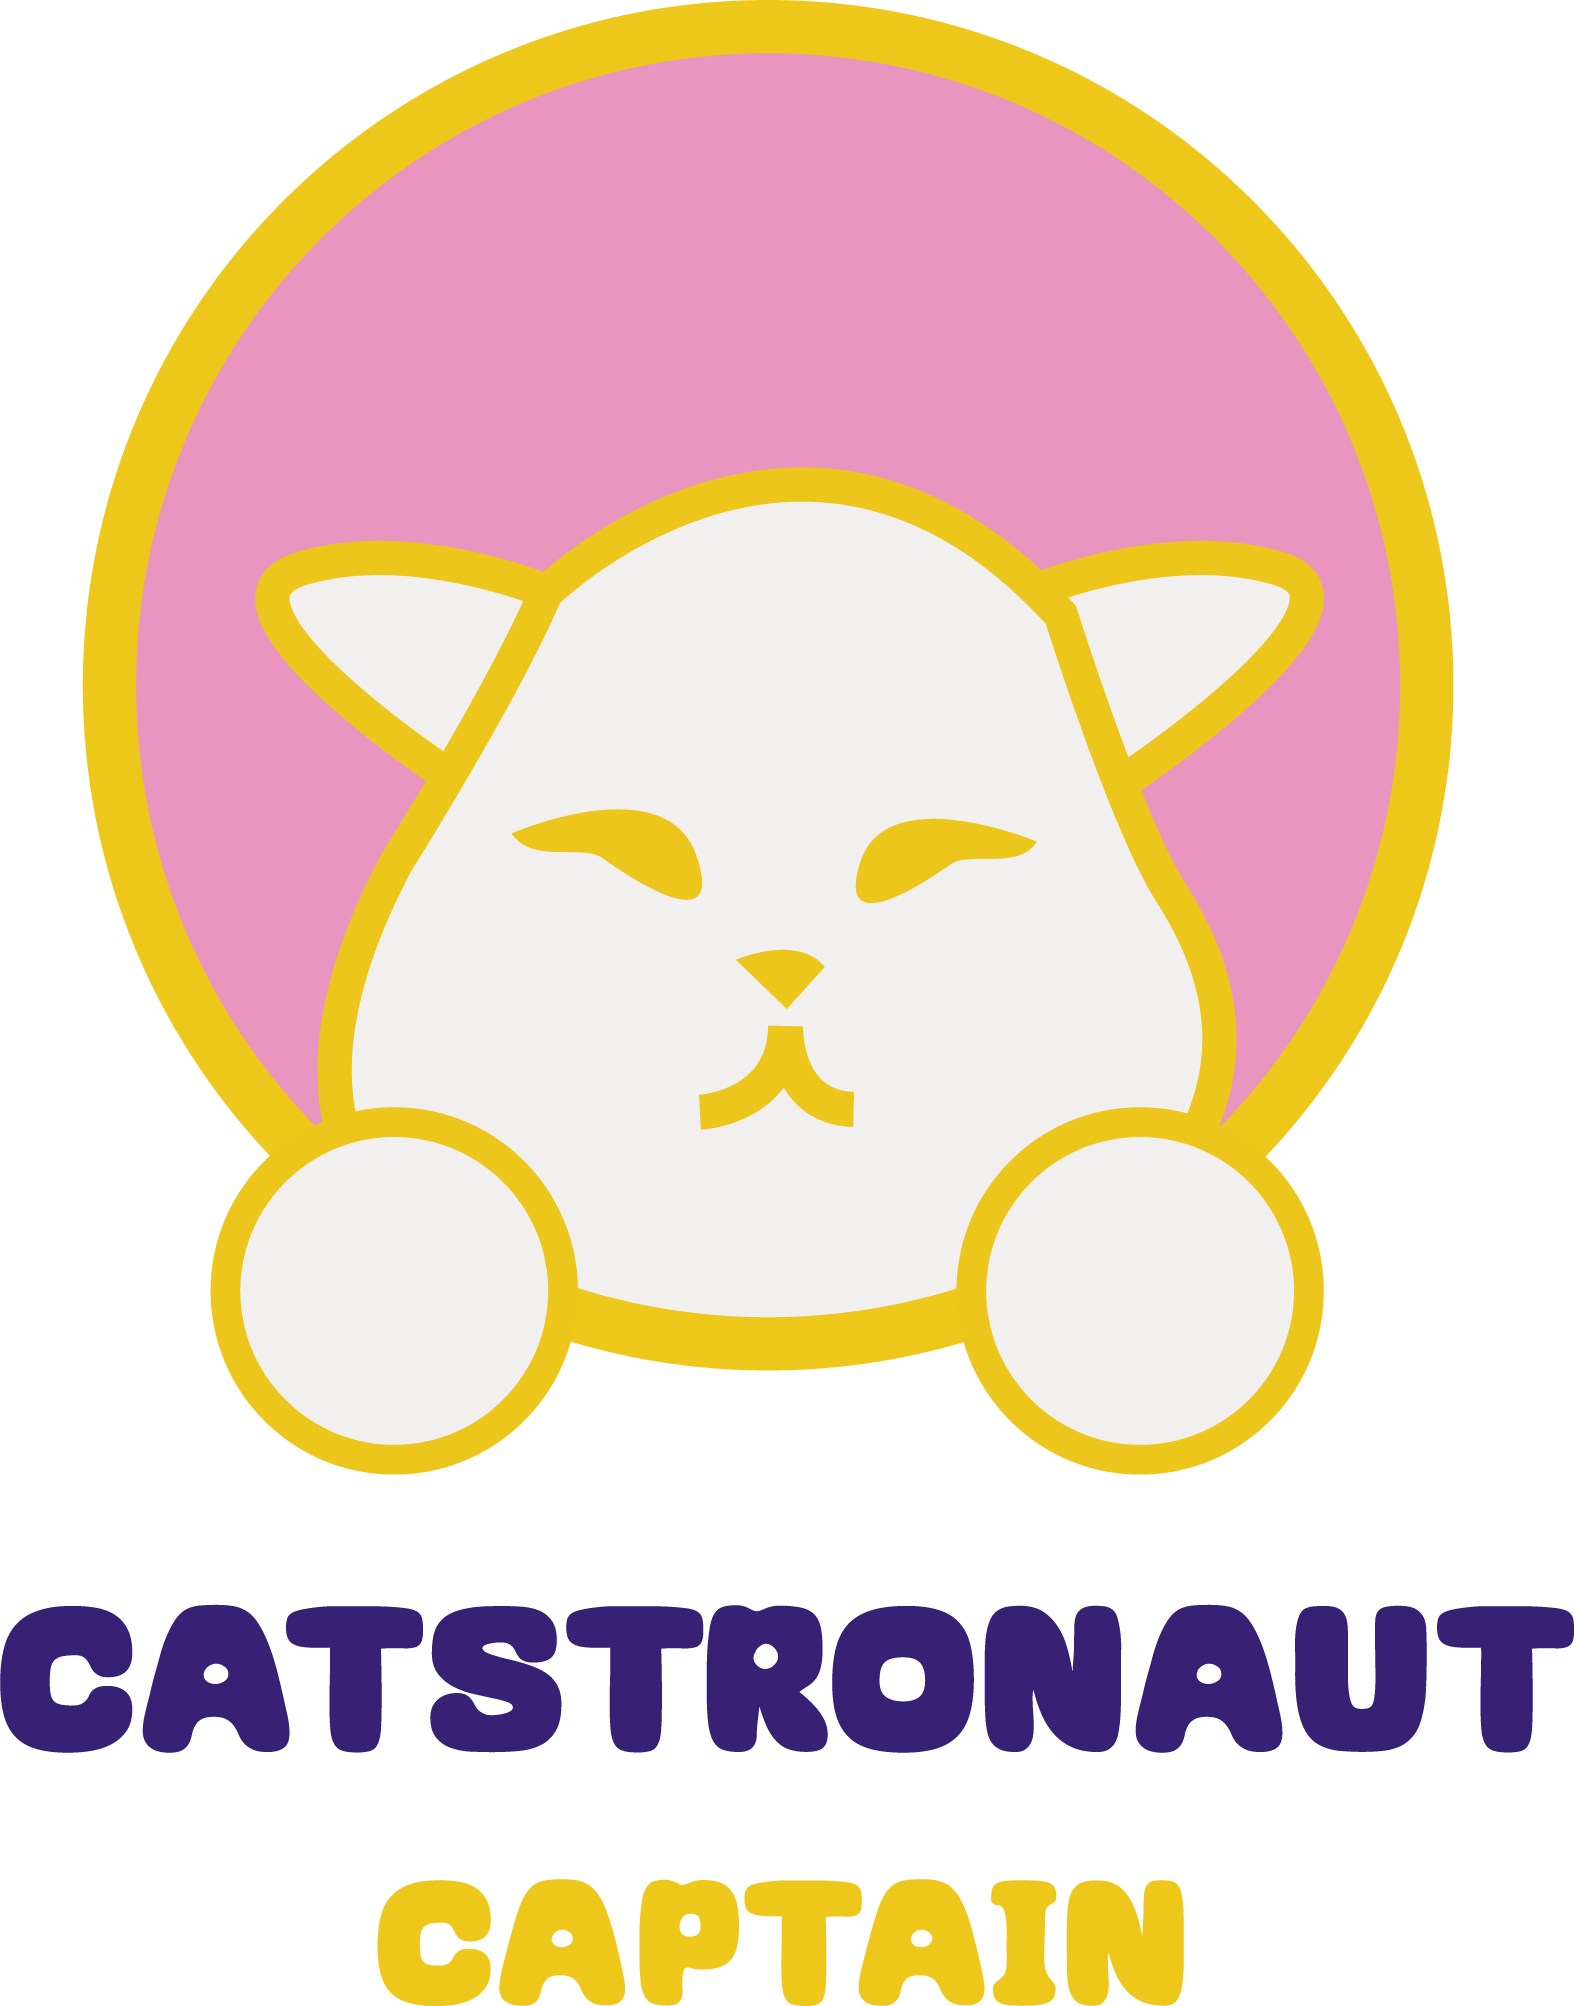 Headshot photograph of Cute Cat Astronaut (Catstronaut).